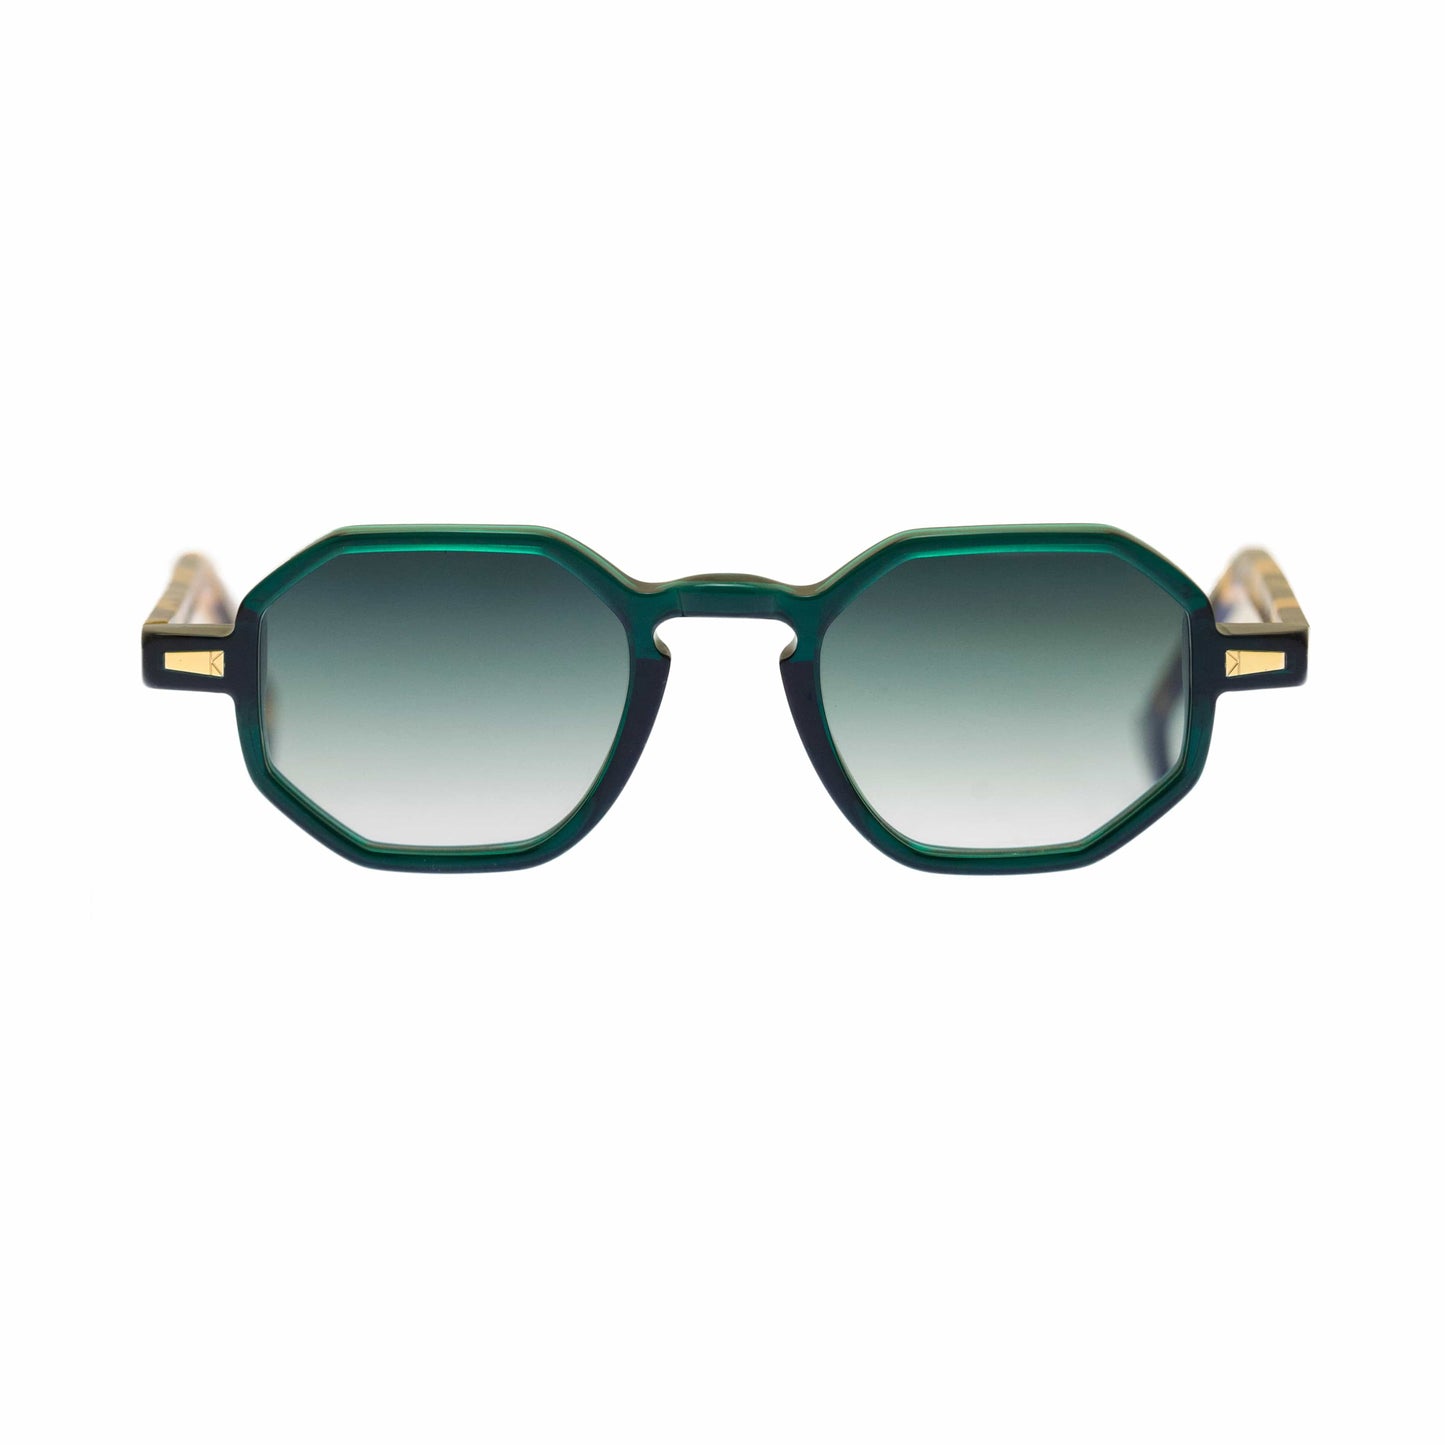 Kyme Occhiali da sole Verde trasparente - lente sfumata verde Kyme Rio: occhiale da sole poligonale made in Italy